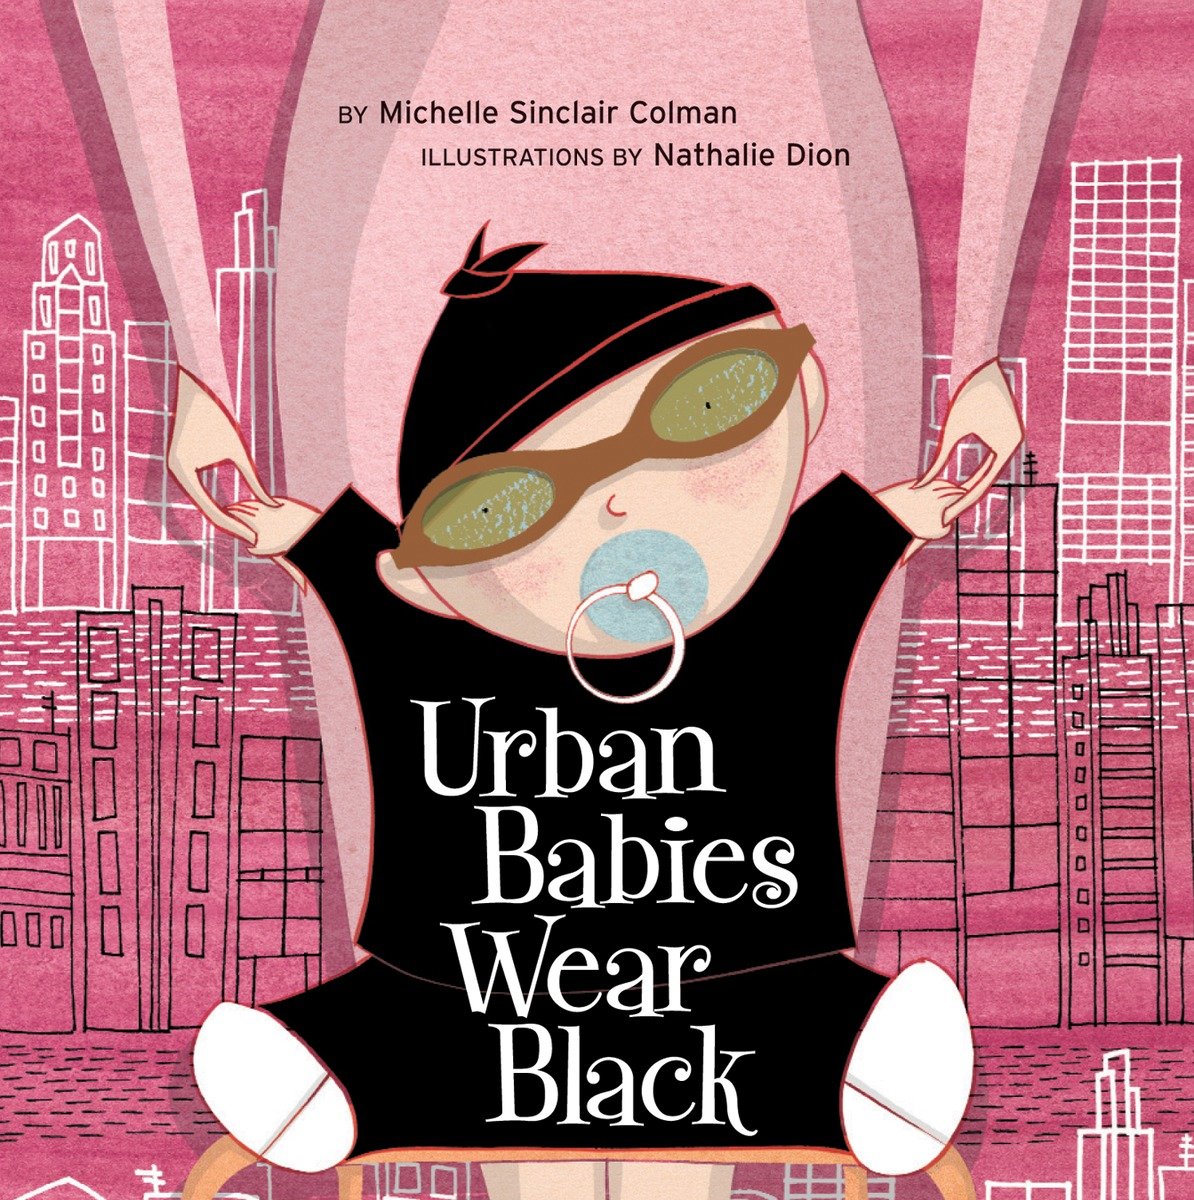 Urban babies wear black cover image